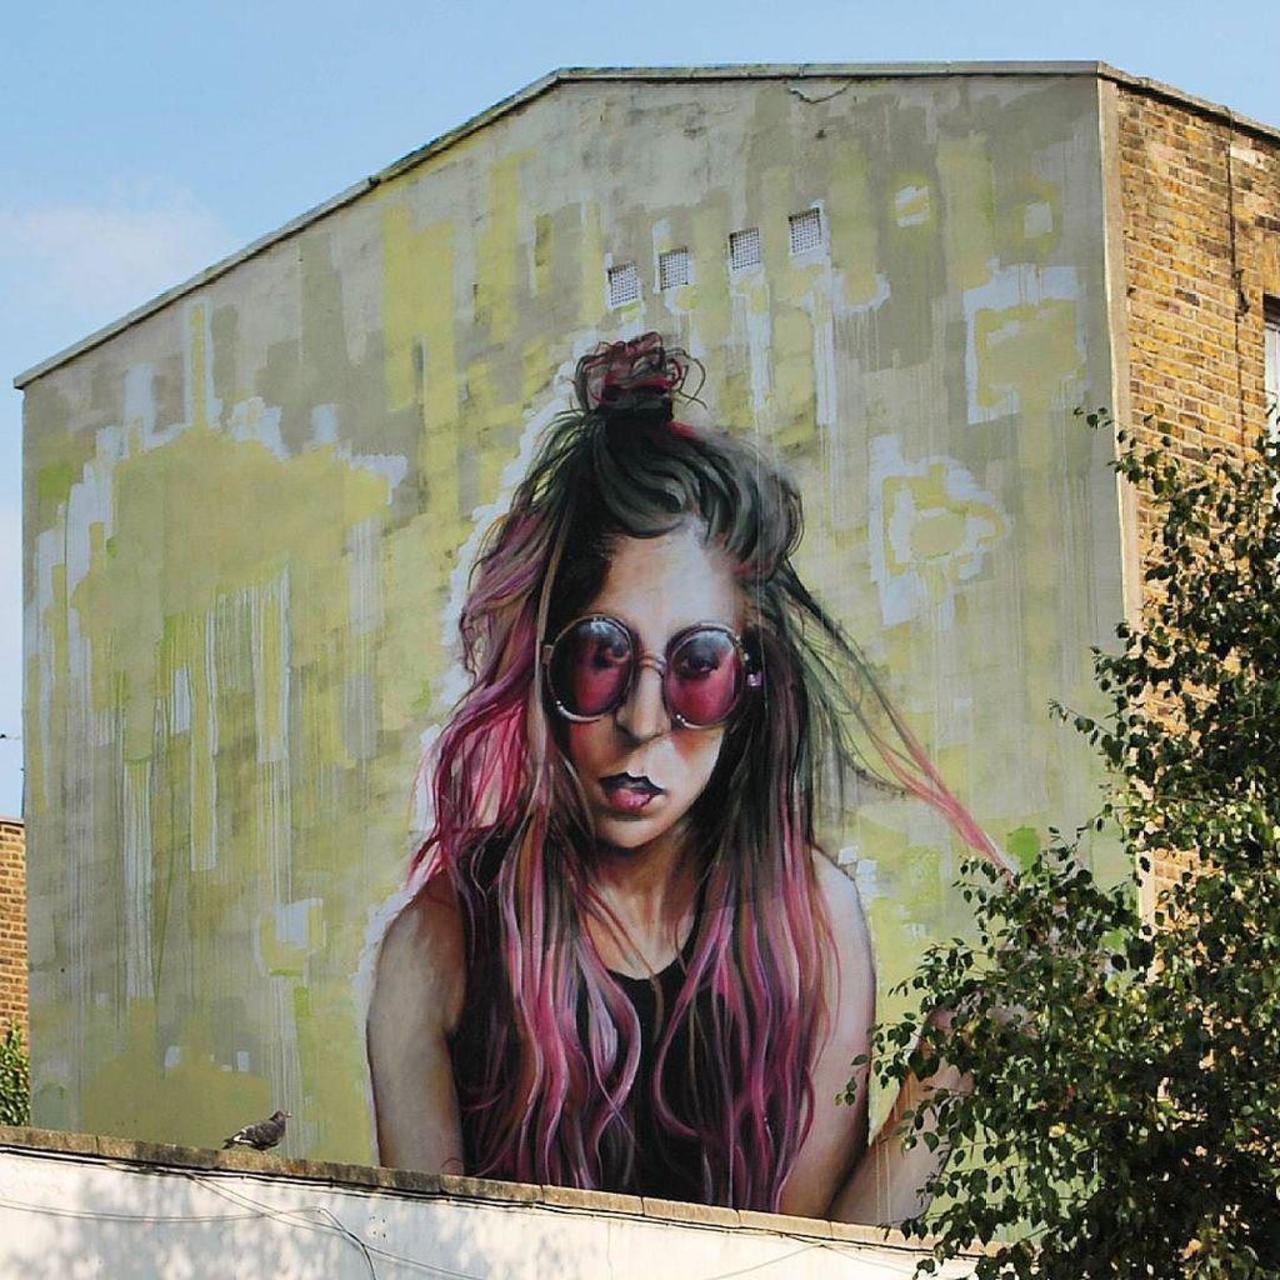 RT @StArtEverywhere: Art by Irony  
#Graffiti #StreetArt #UrbanArt #WhoAmIrony #BayhamStreet #Camden #London #Nikon #NikonD60 #NikonPho… http://t.co/iAONNW15zO